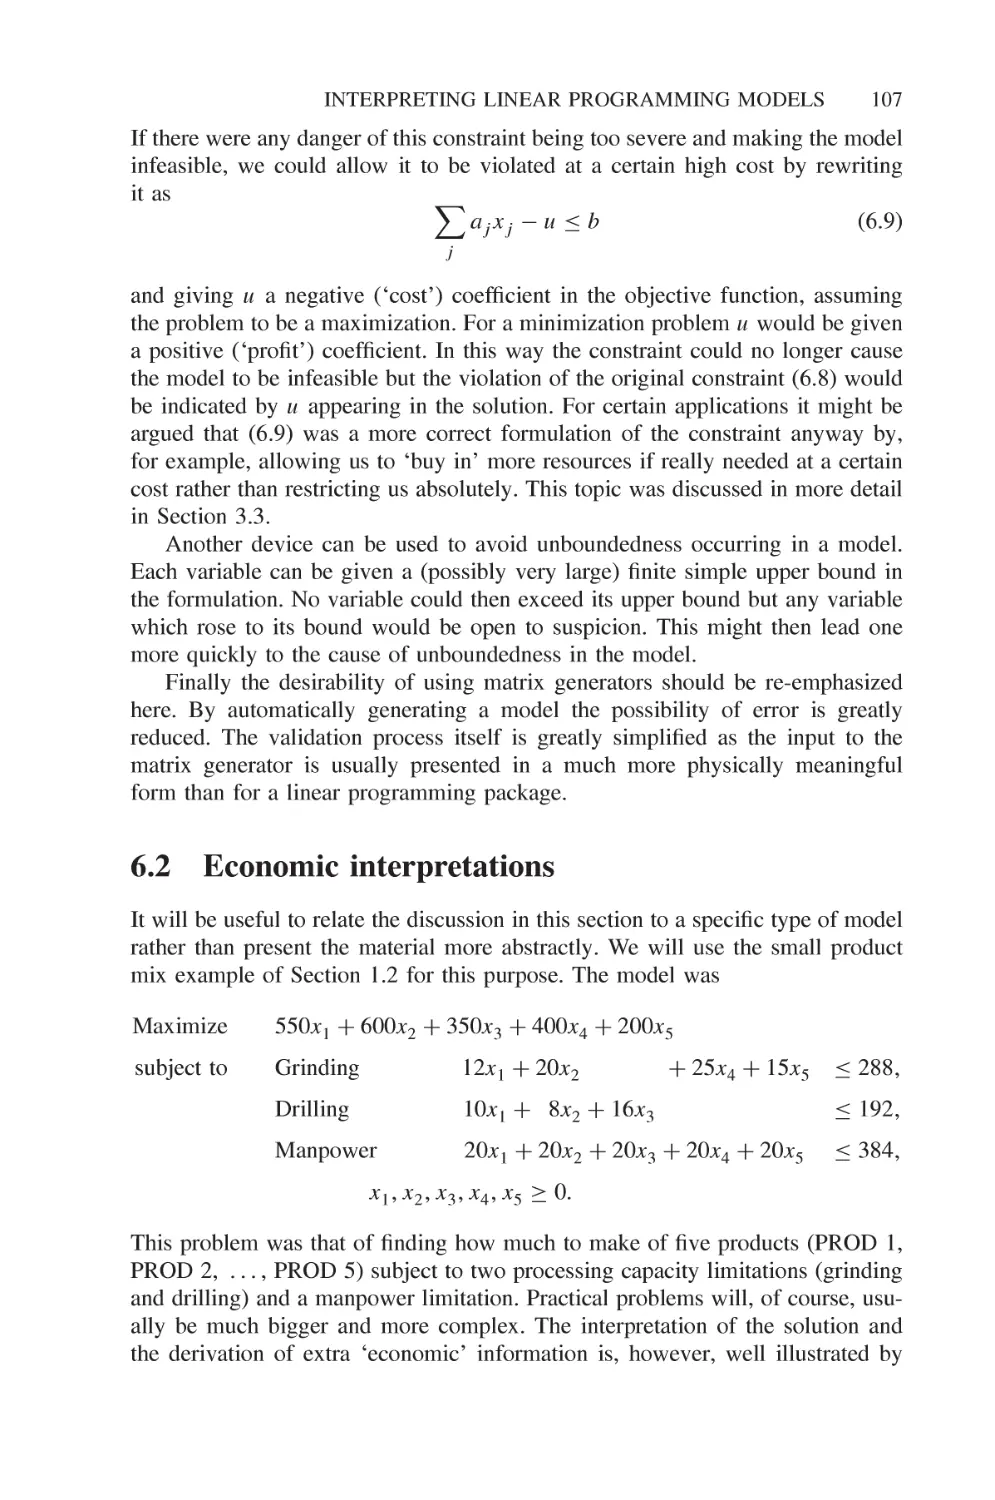 6.2 Economic interpretations